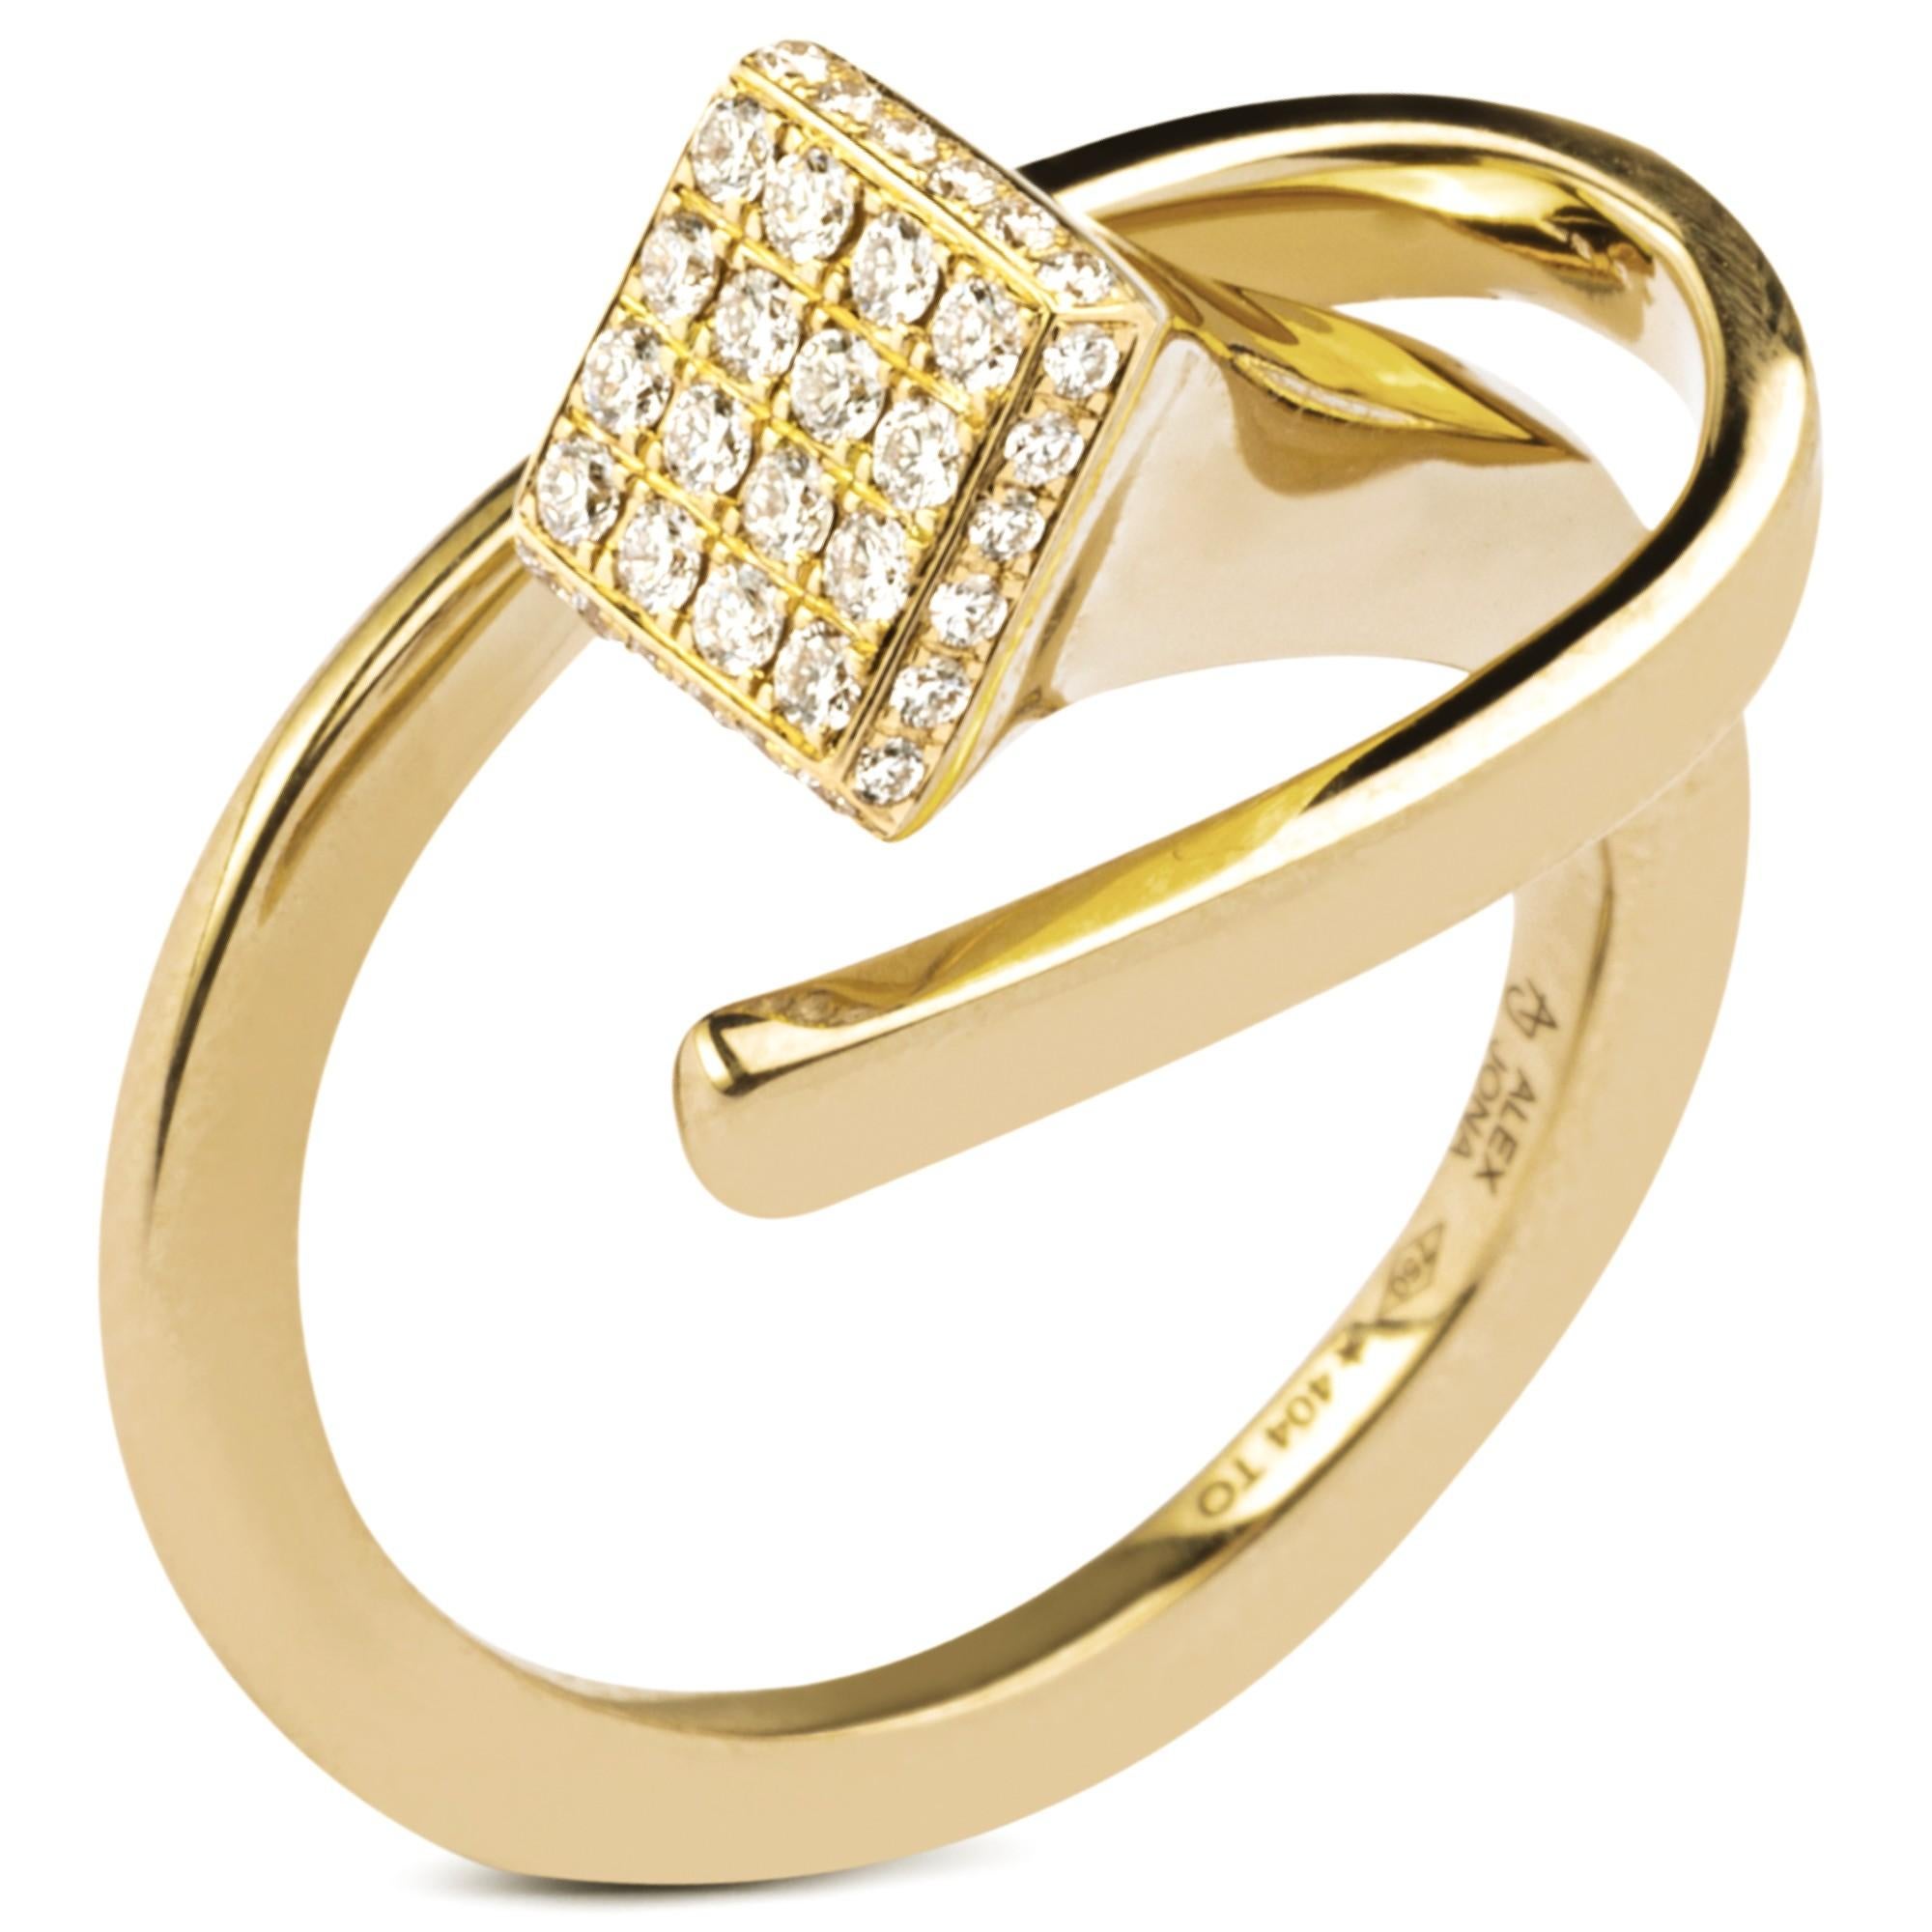 6gm gold ring